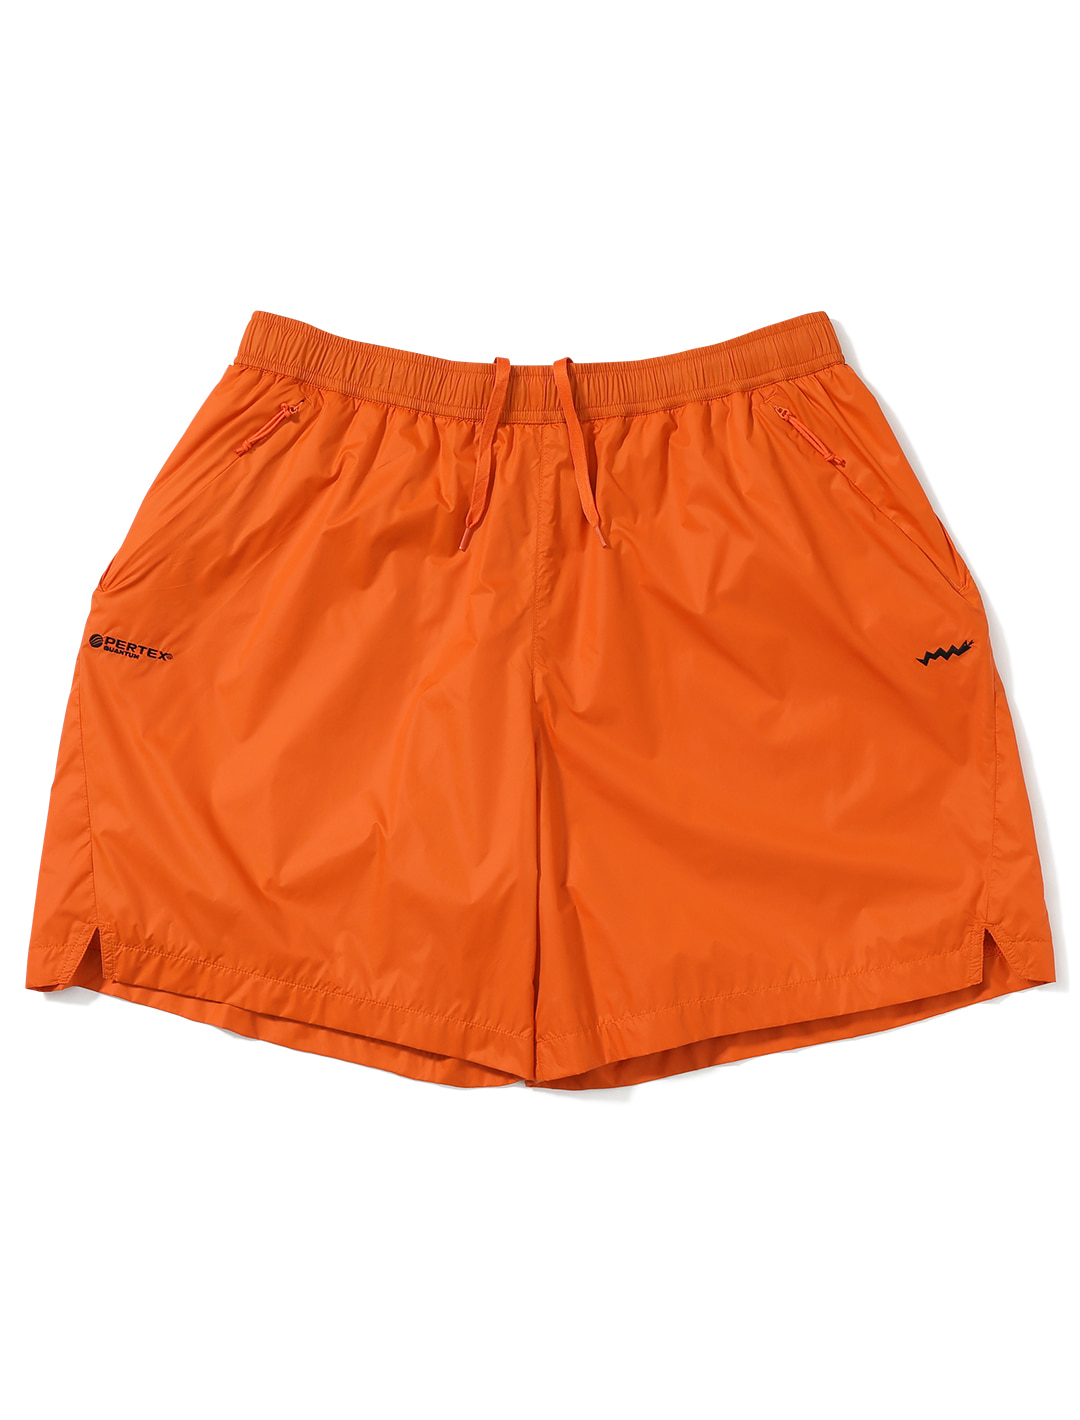 Pertex® Almighty Shorts Orange